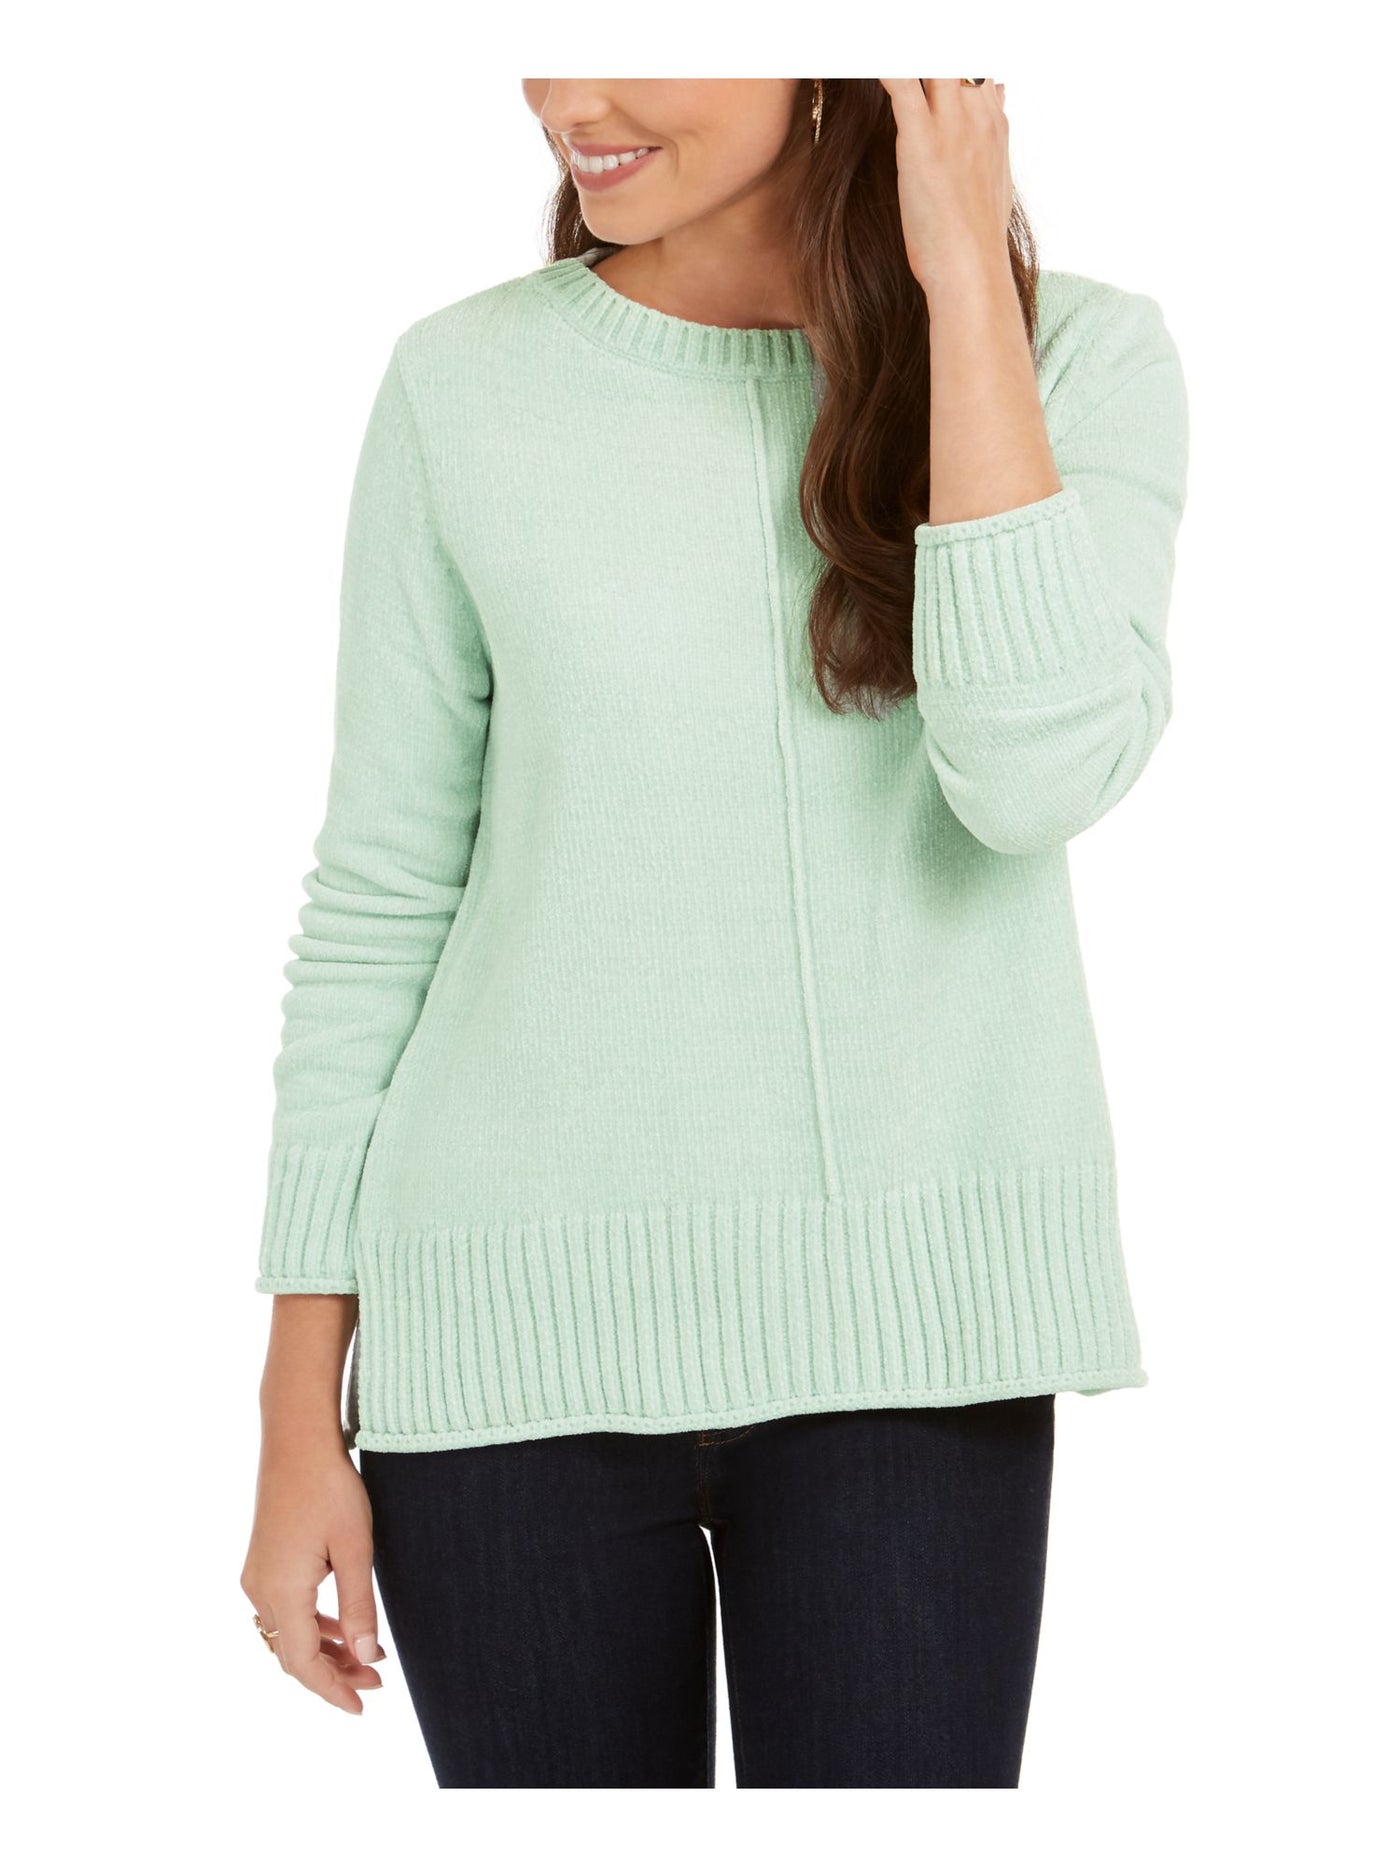 STYLE & COMPANY Womens Aqua Heather Long Sleeve Sweater Size: M